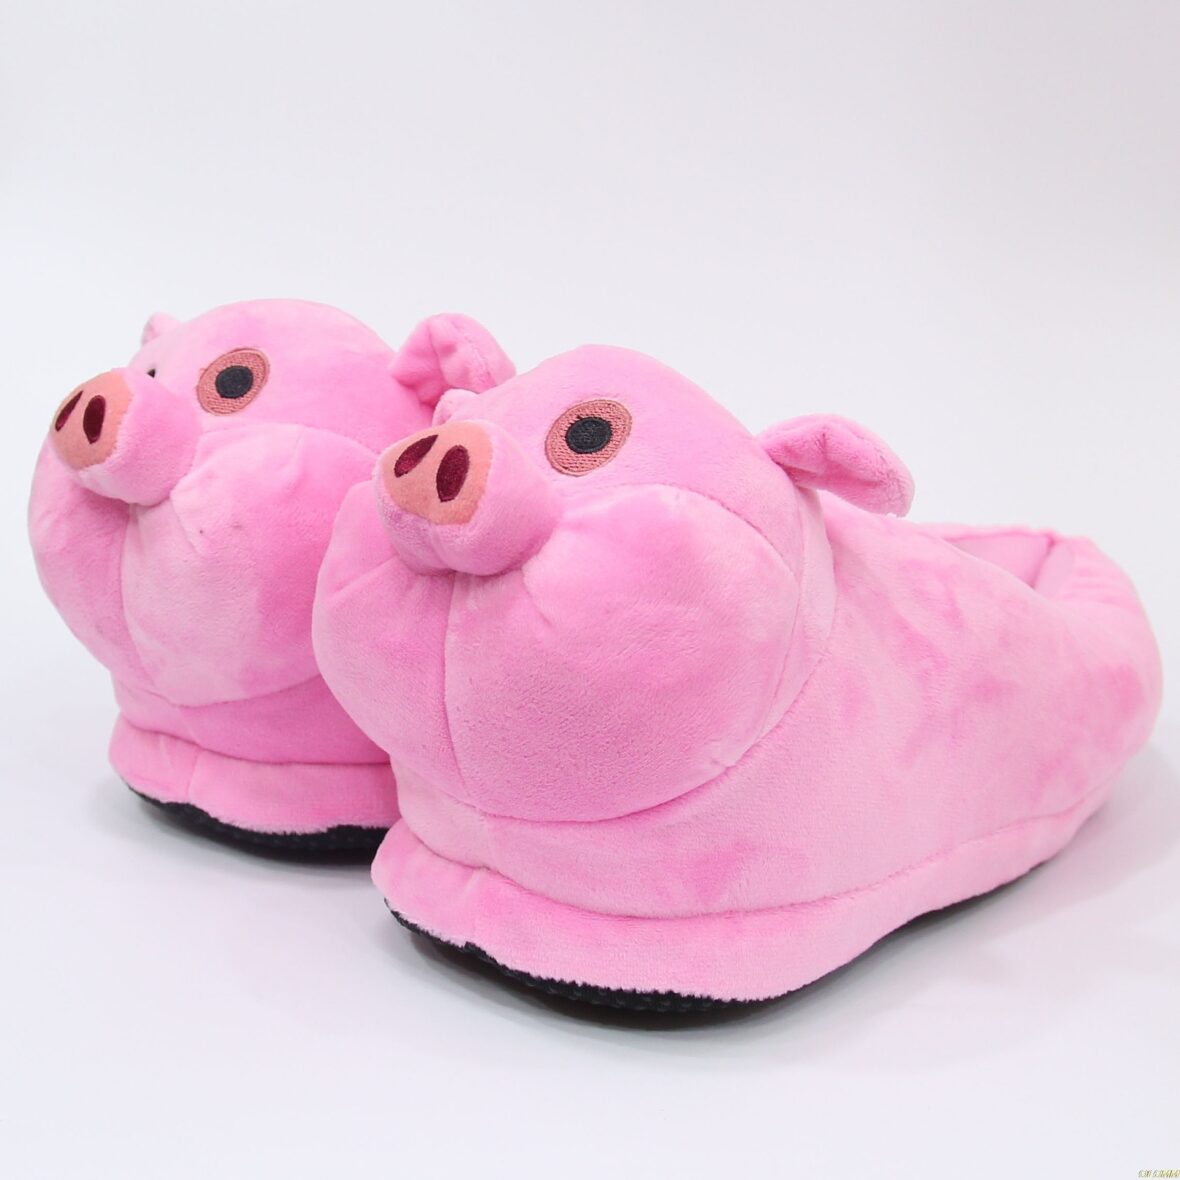 Pink Pig Soft Stuffed Plush Slippers